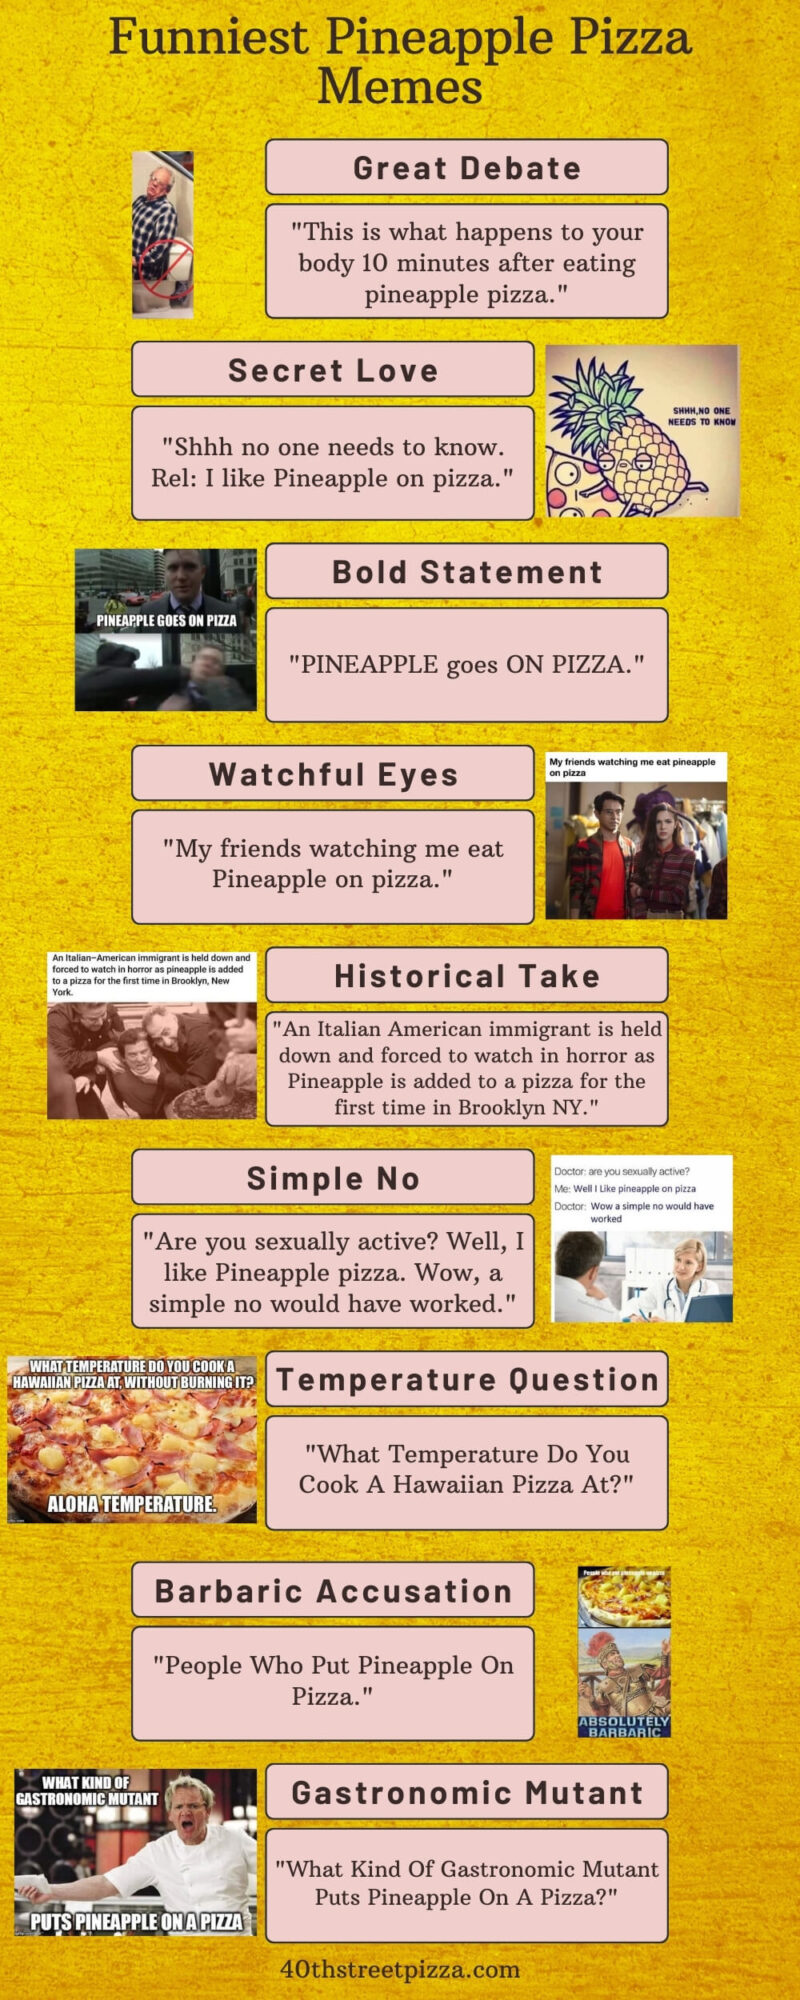 Illustration of Pineapple Pizza Memes